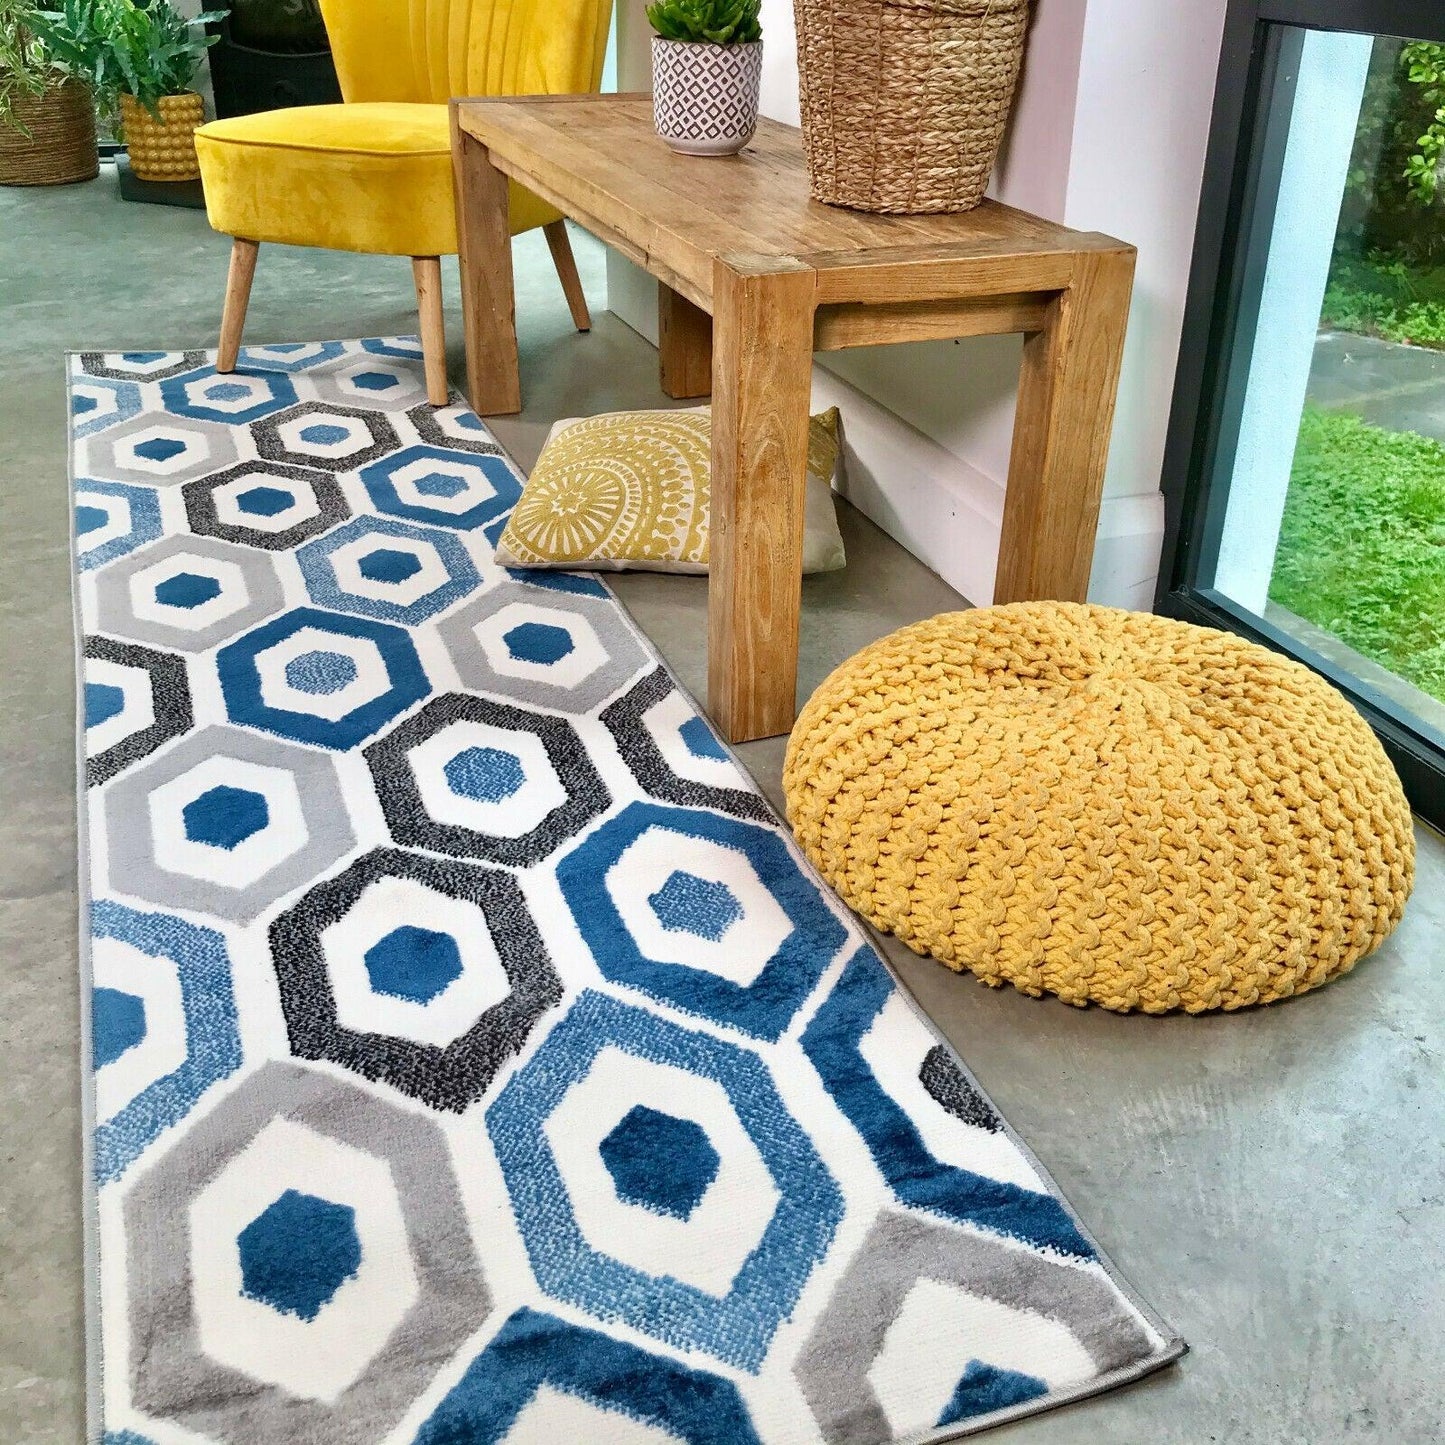 Honeycomb Geometric Tile Floor Area Rug Runner - Blue Grey